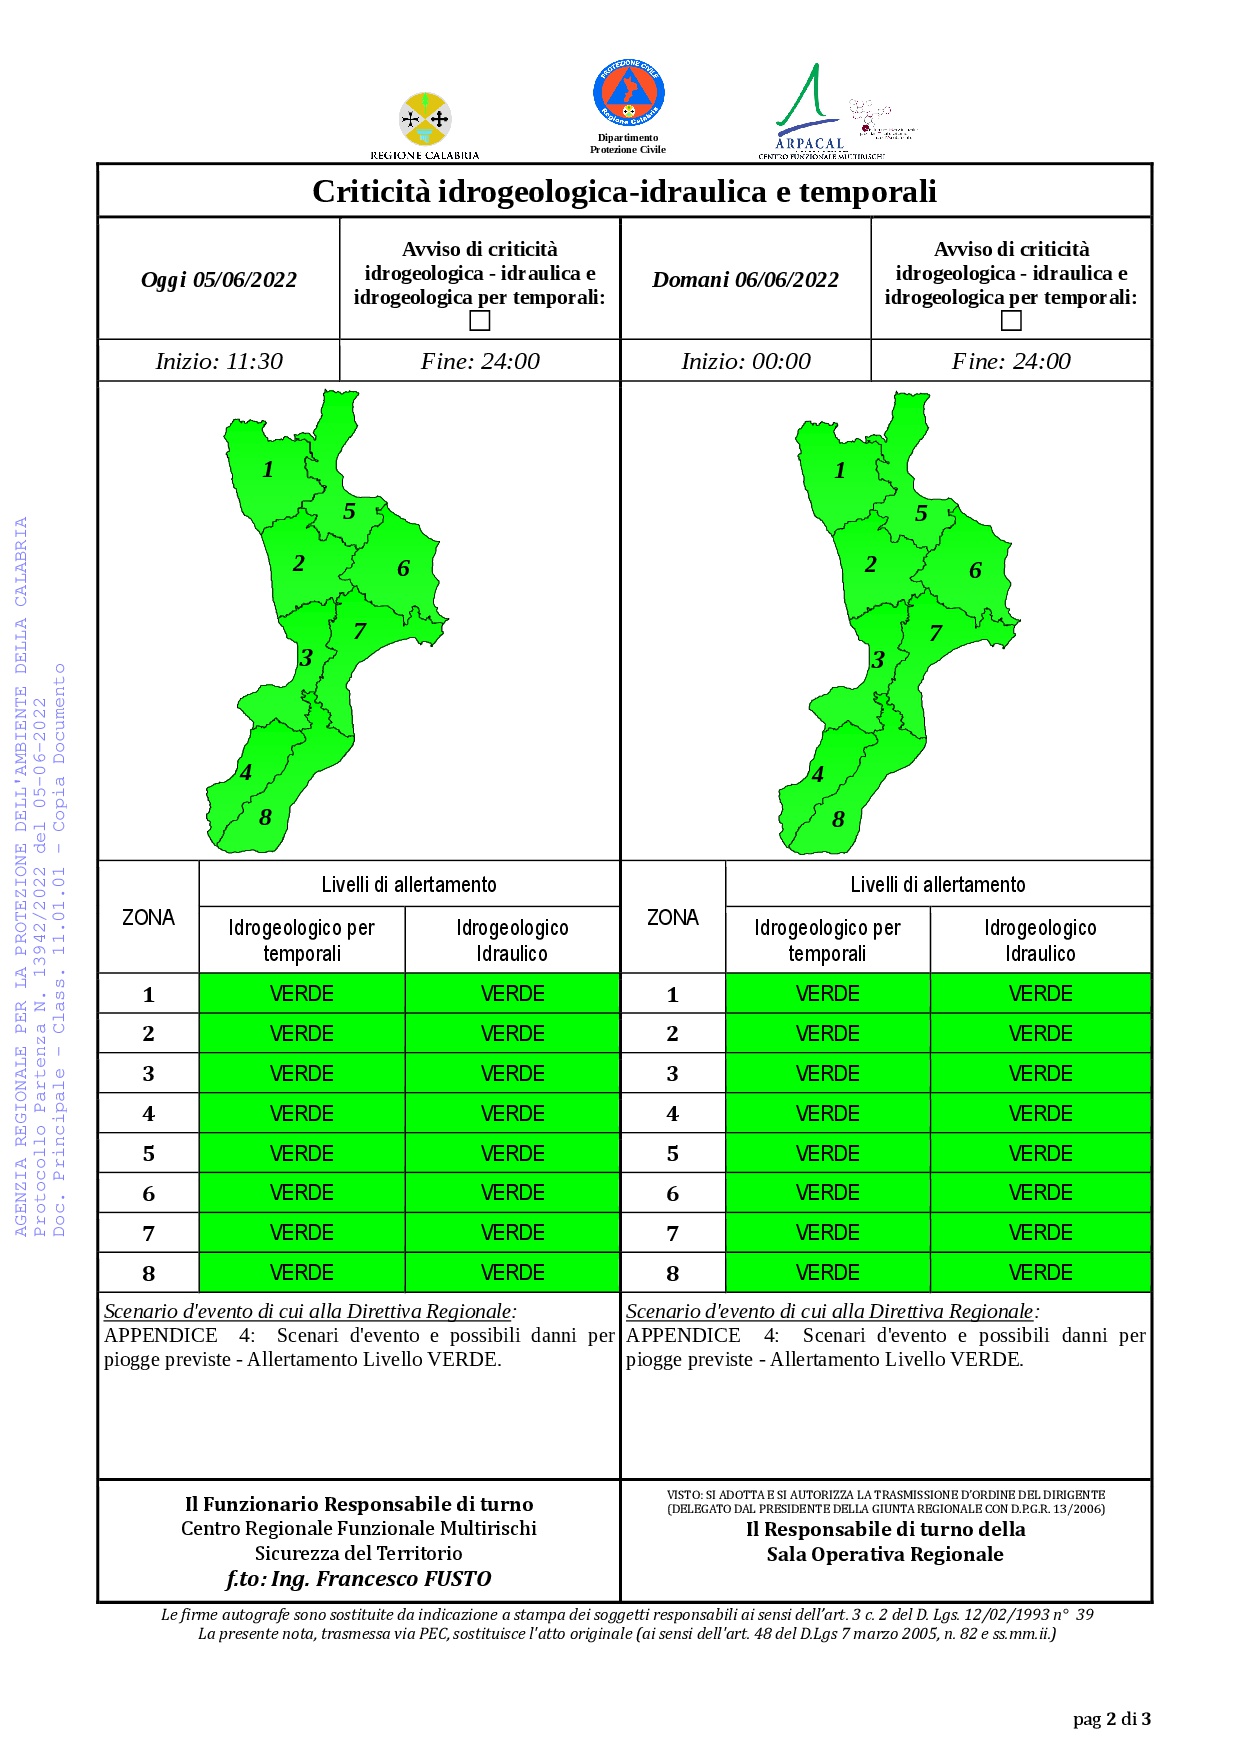 Criticità idrogeologica-idraulica e temporali in Calabria 05-06-2022